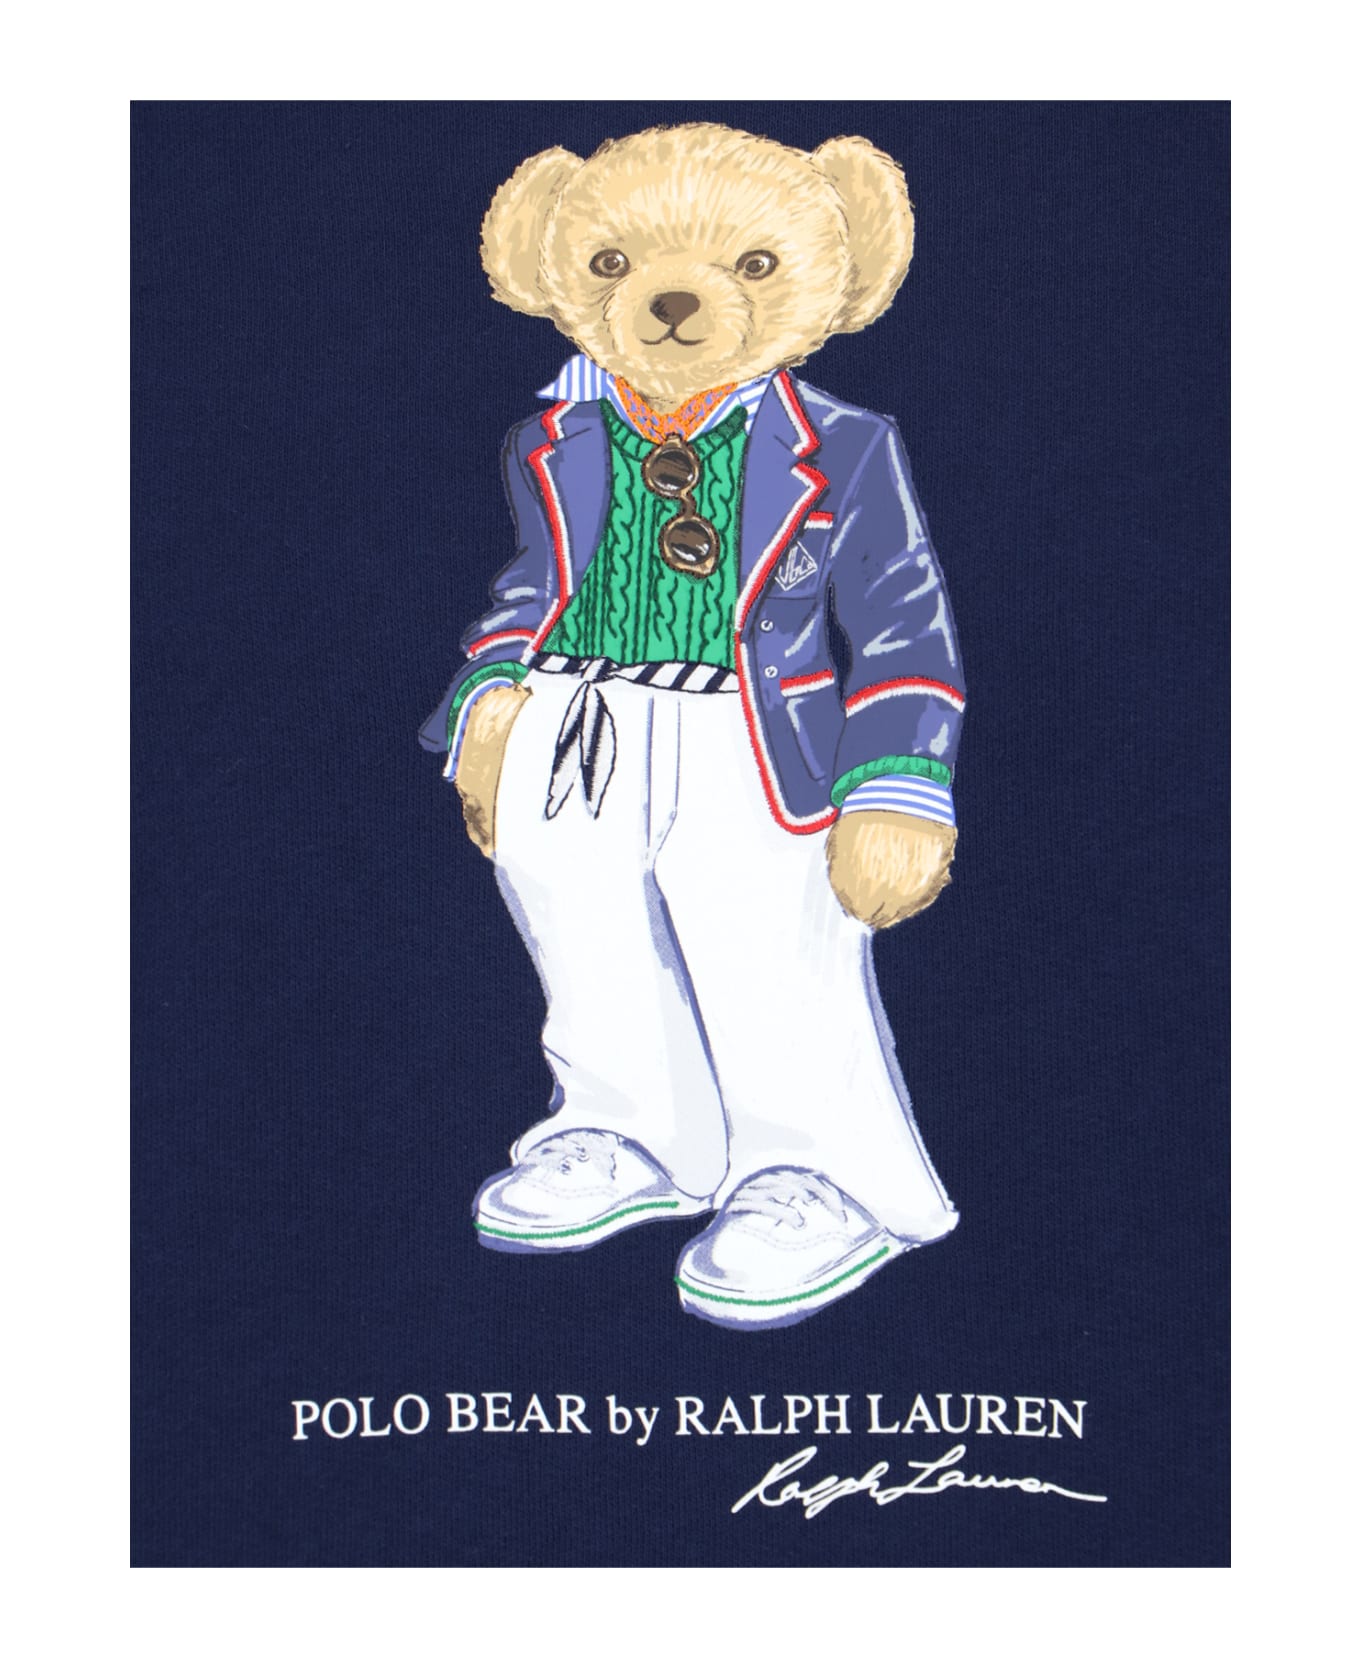 Polo Ralph Lauren 'bear' Crew Neck Sweatshirt - Blue